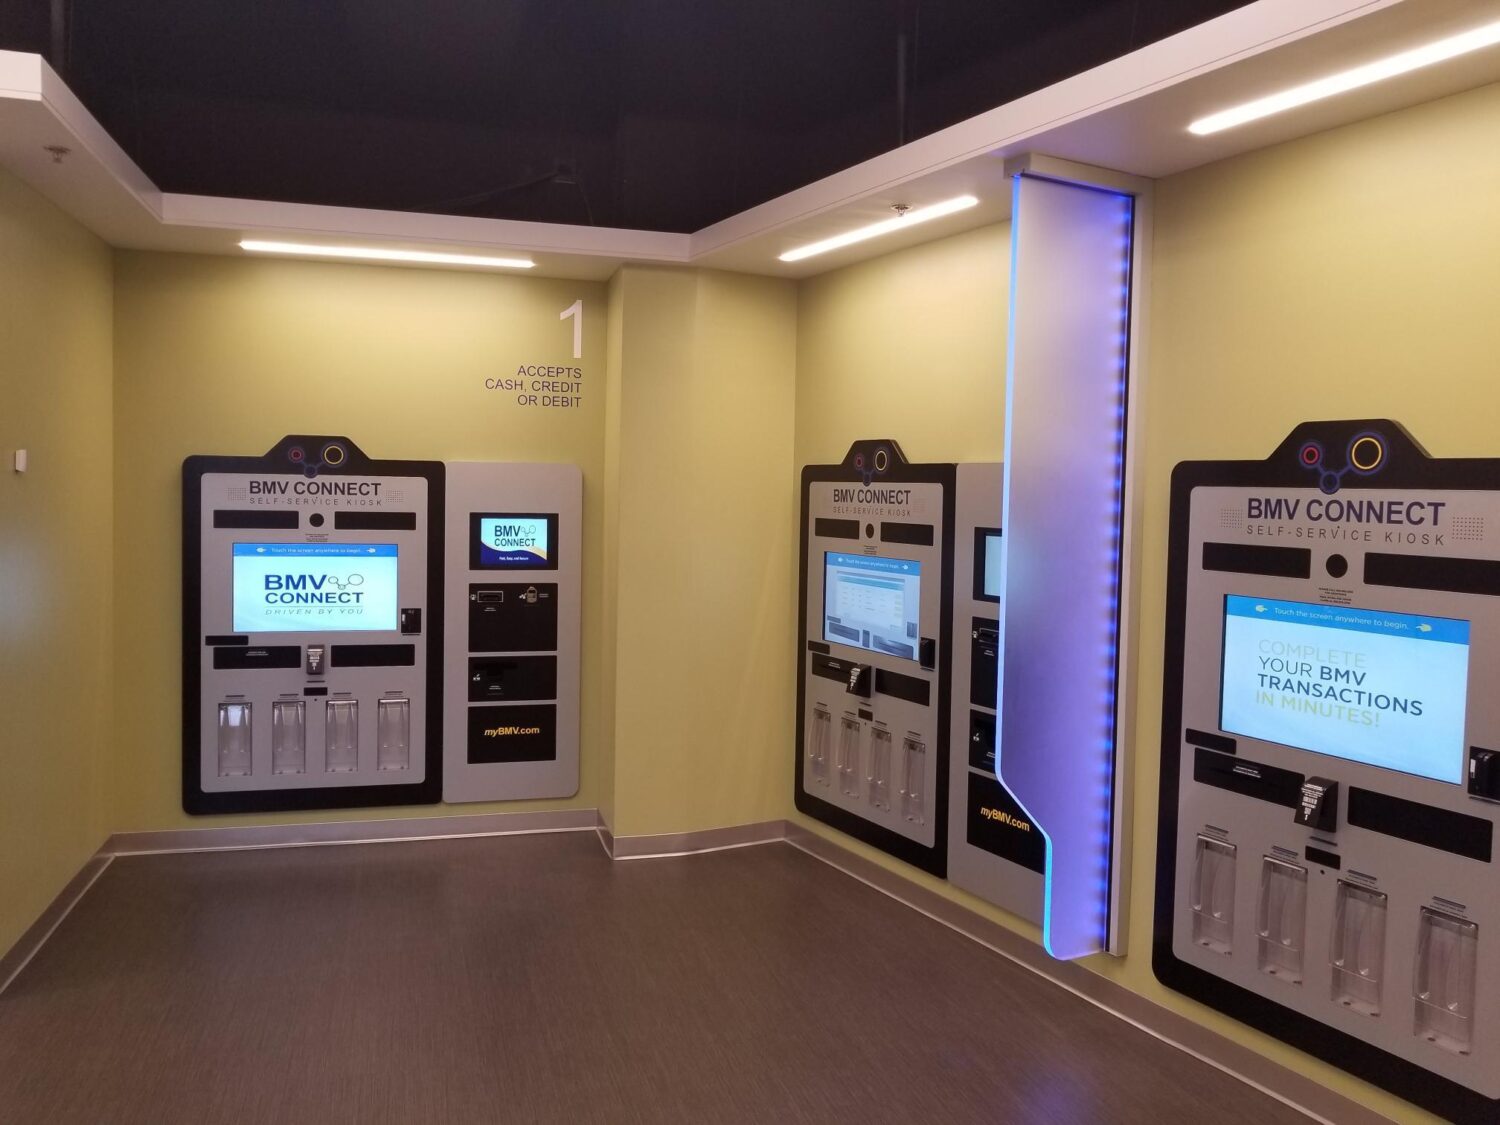 BMV Connect kiosk stations